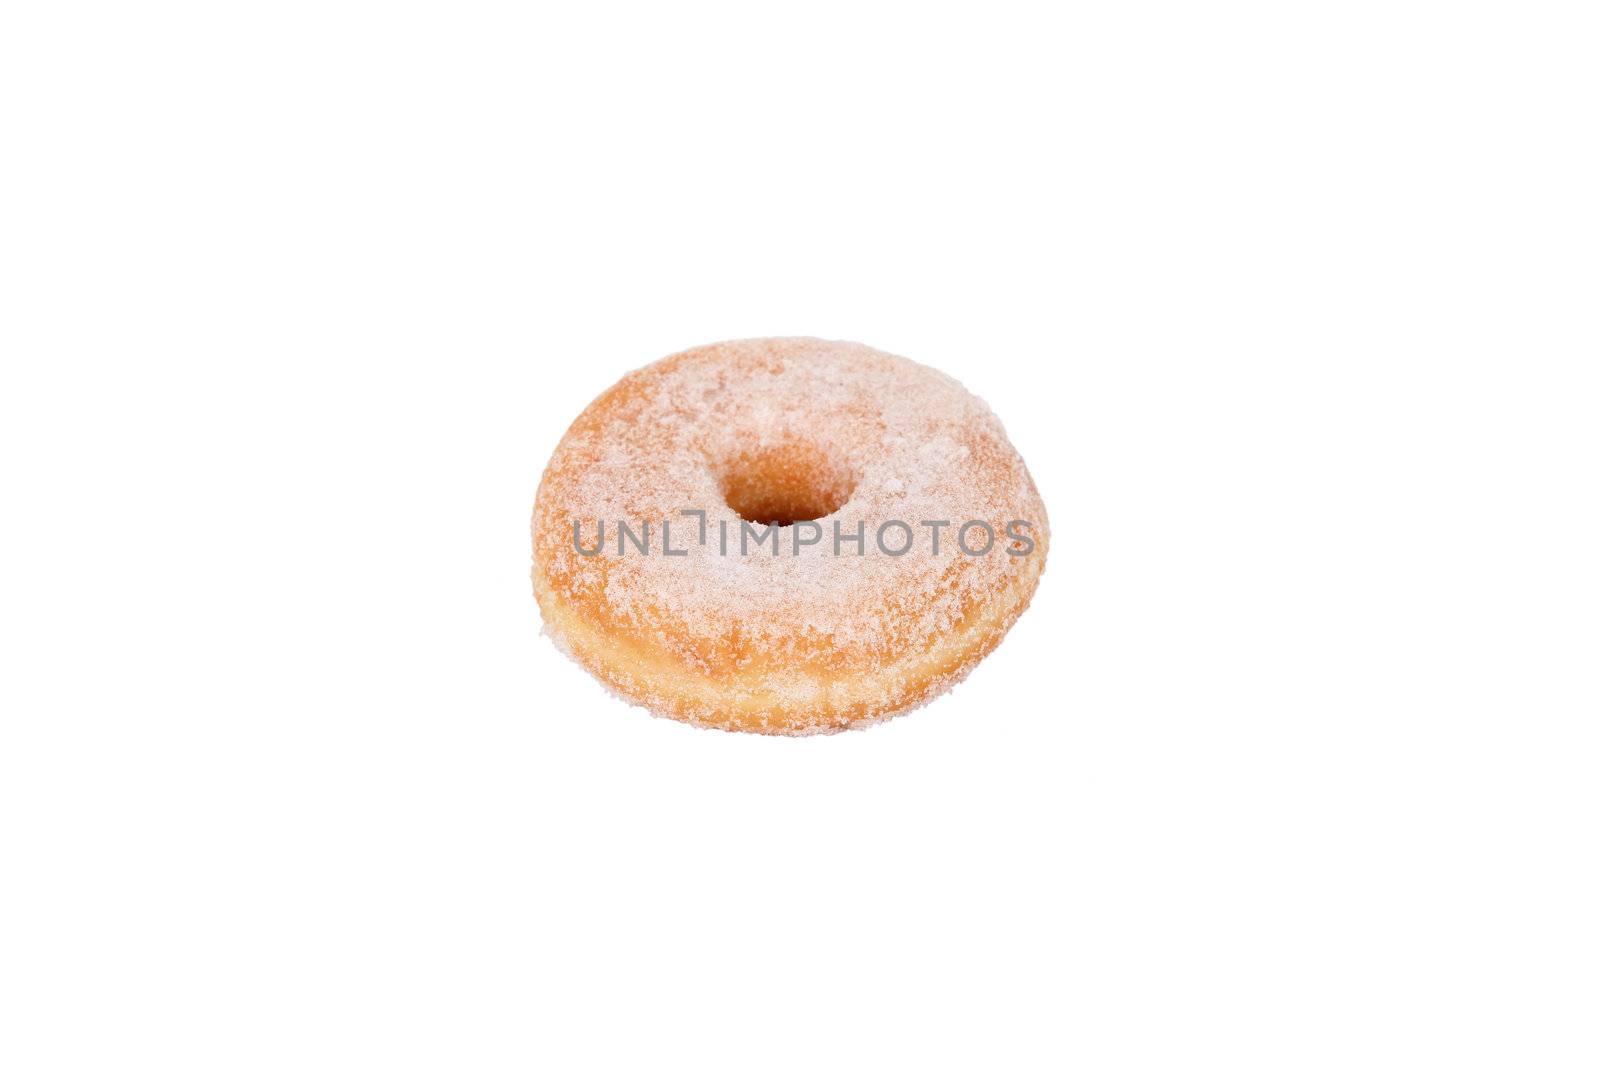 Ring doughnut by phovoir